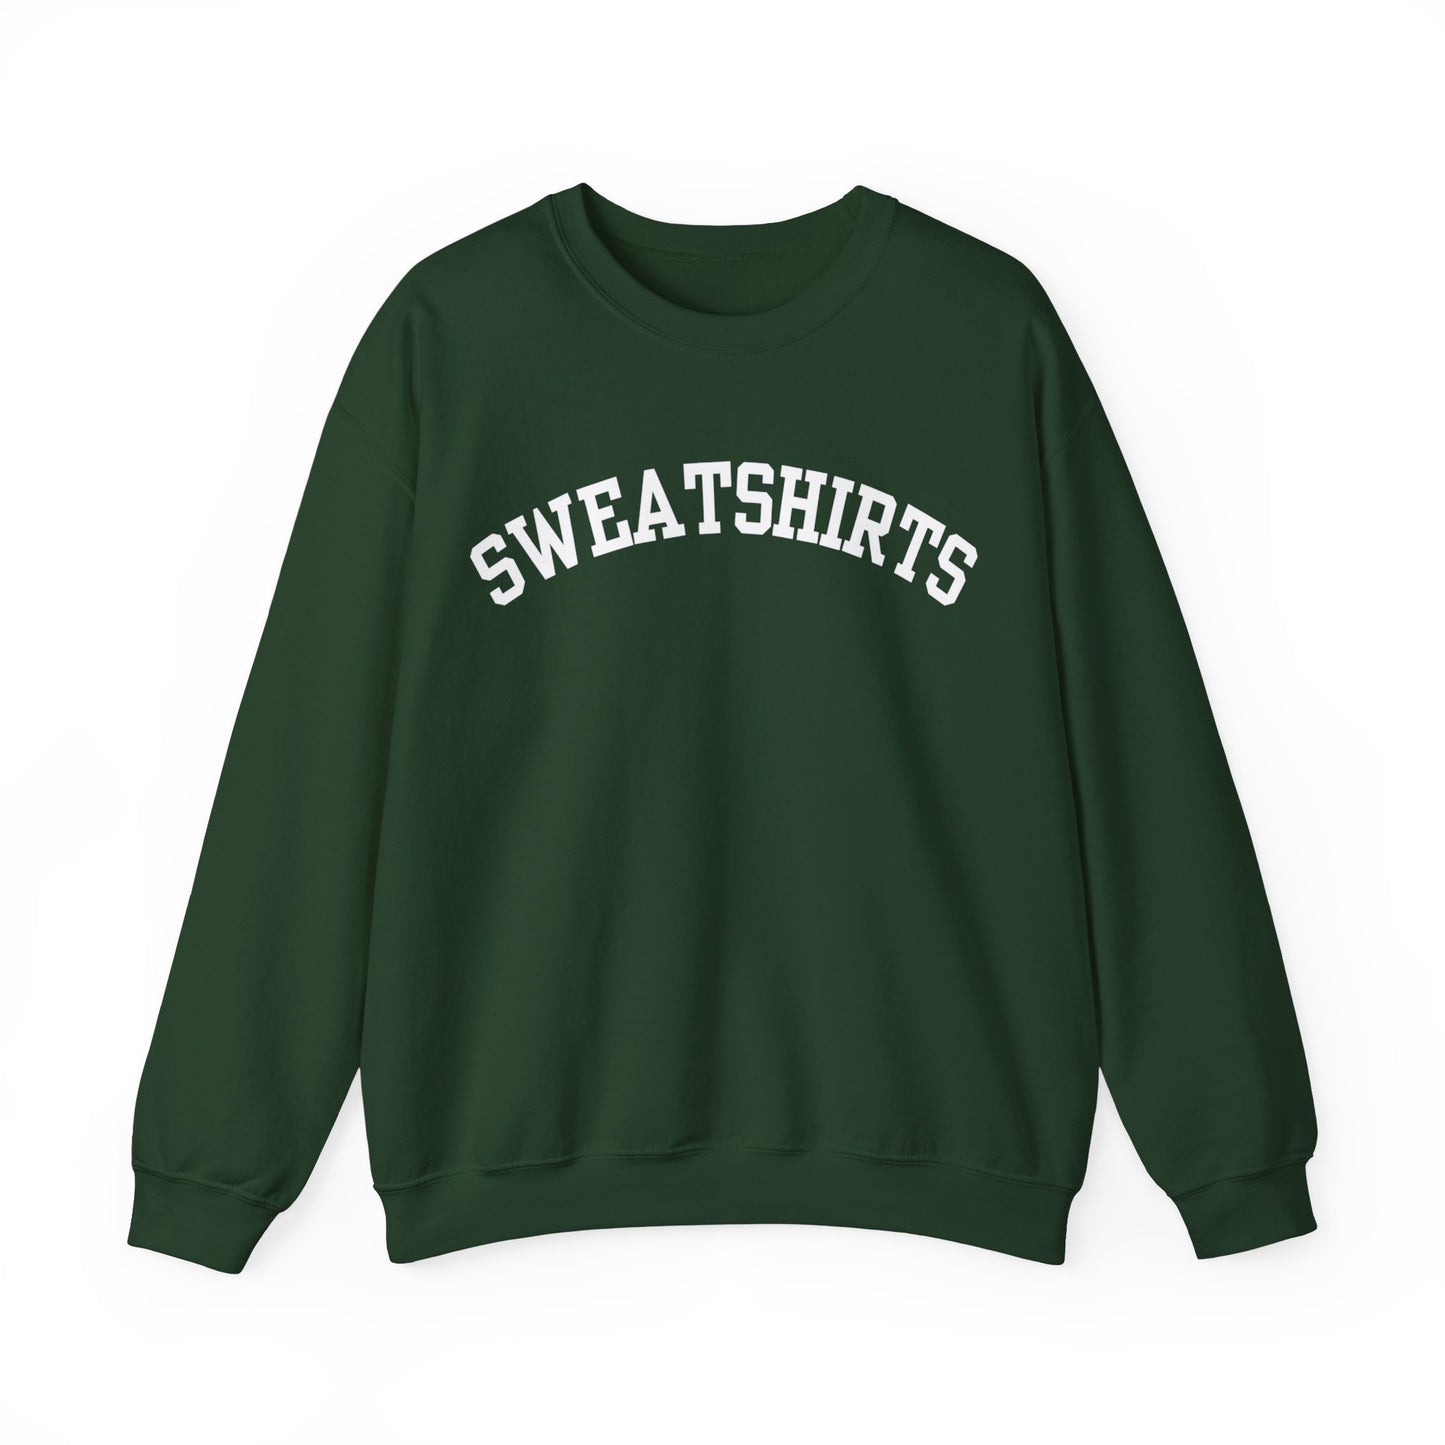 "Sweatshirts" Sweatshirt